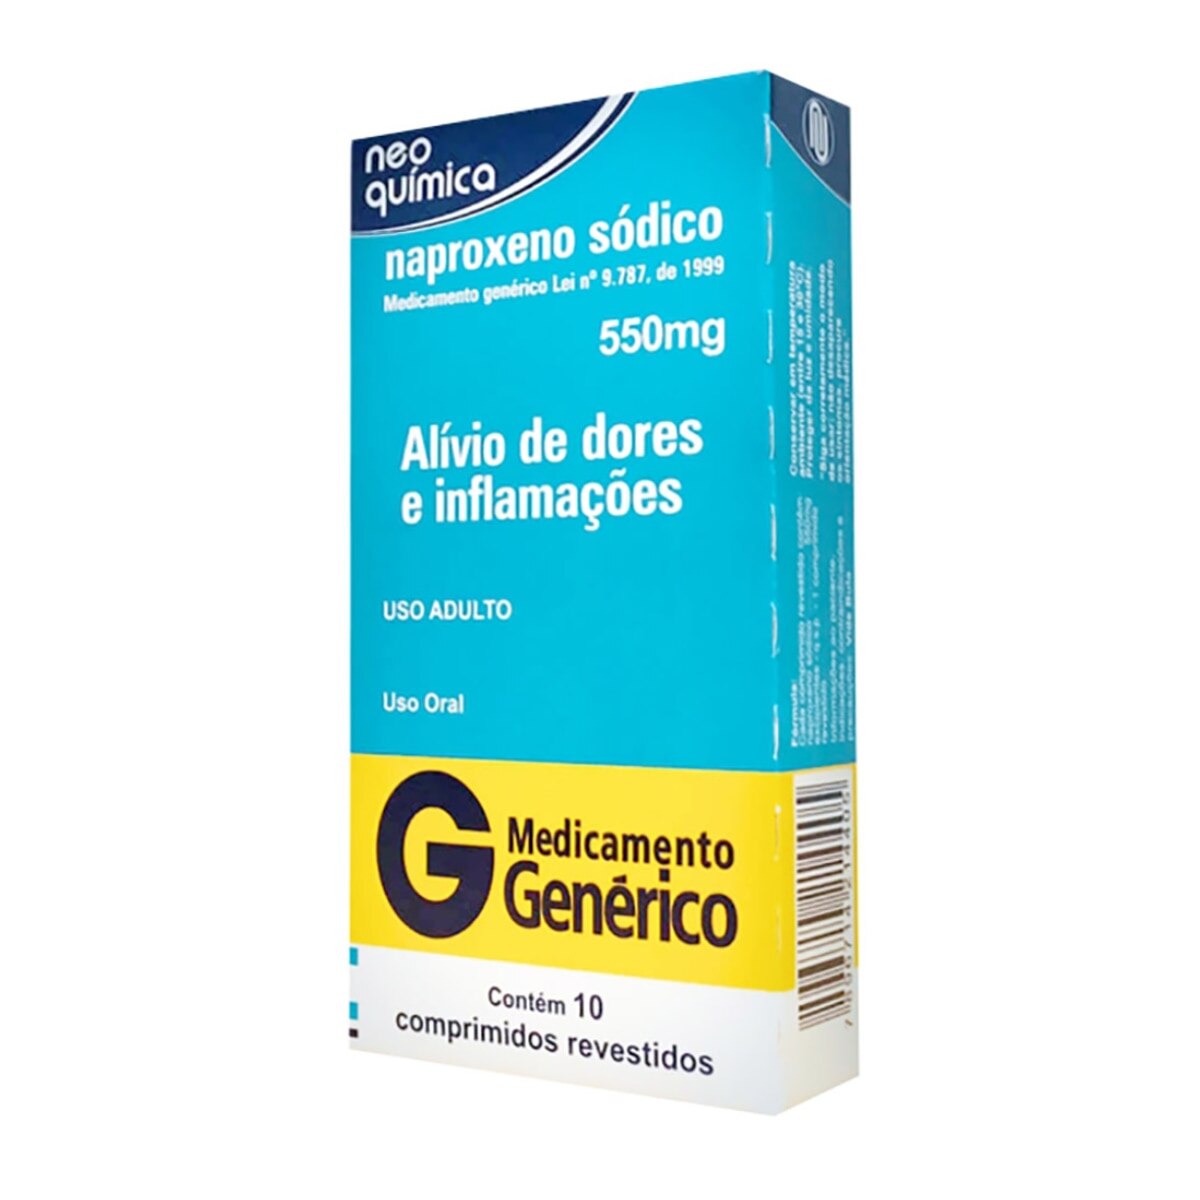 Naproxeno Sodico 550mg 10 Comprimidos Revestidos Neo Quimica Generico